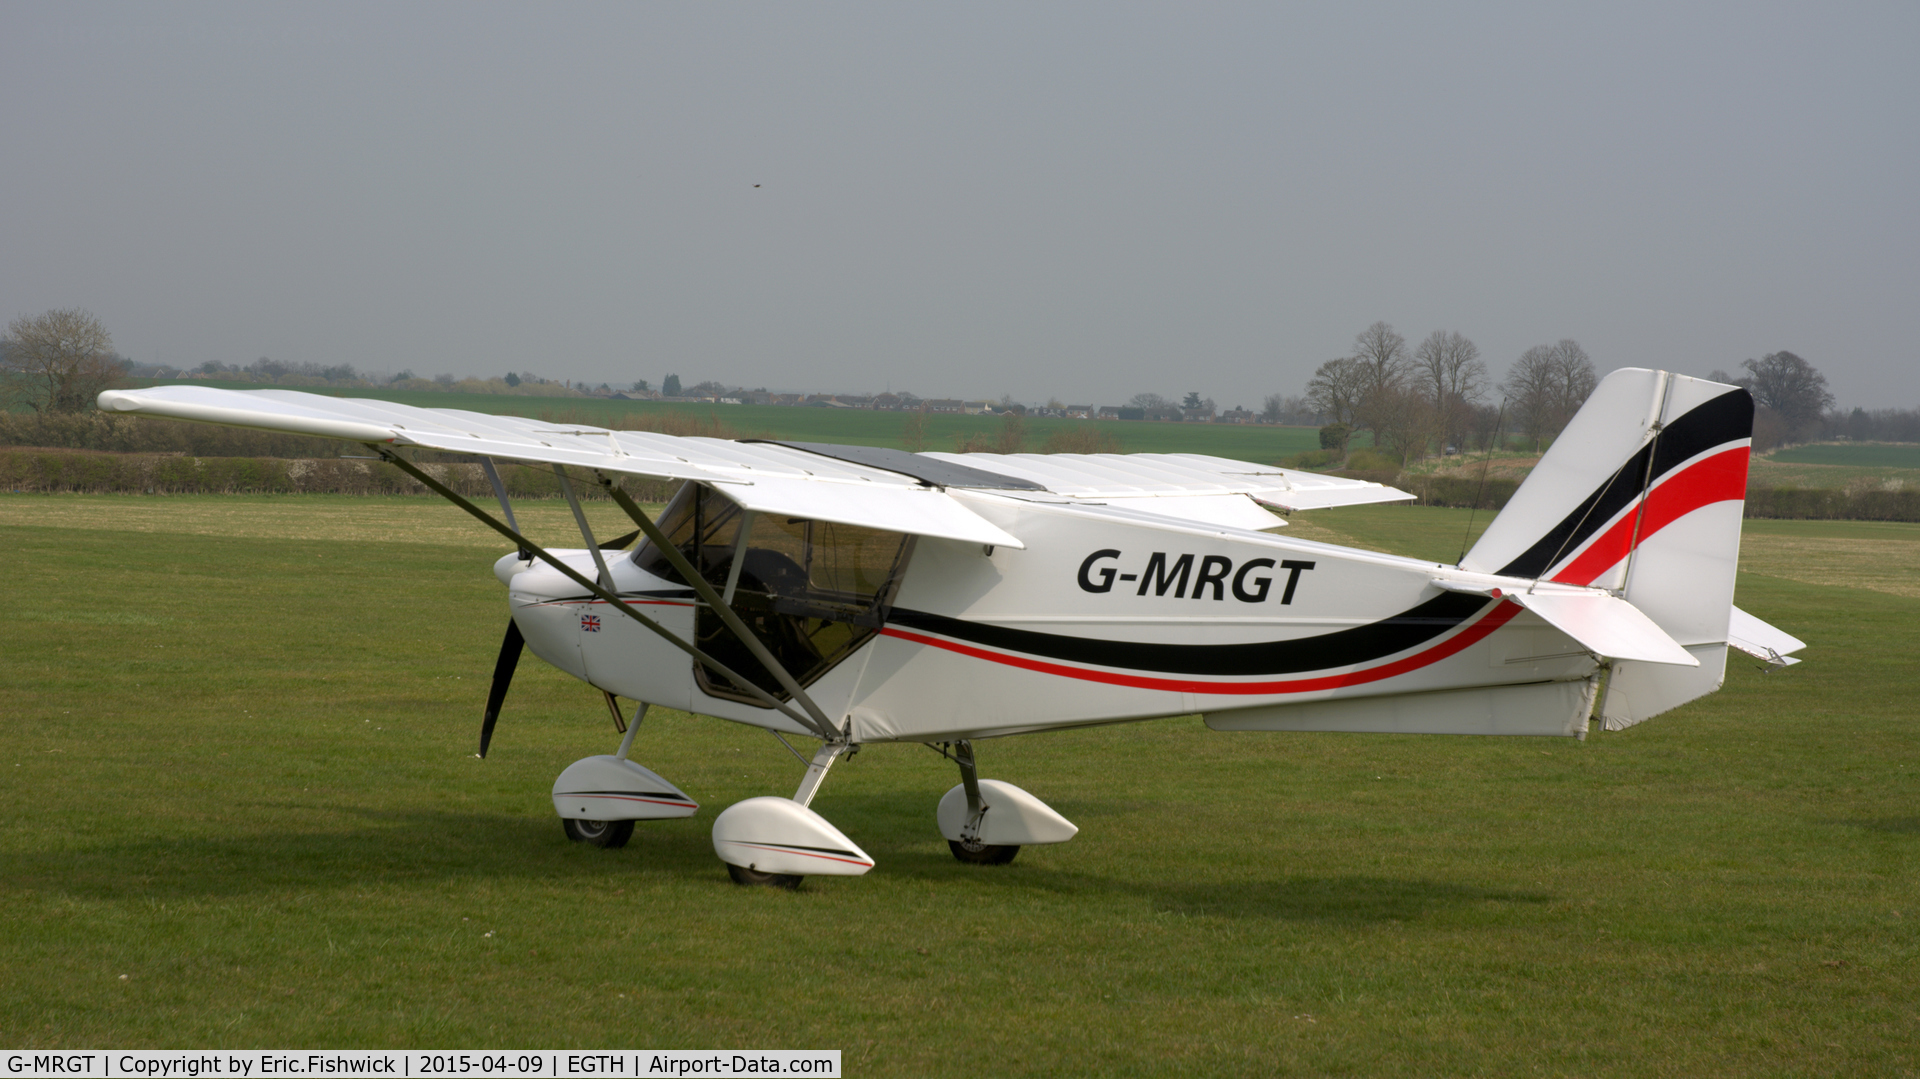 G-MRGT, 2013 Skyranger 912(1) C/N BMAA/HB/638, 1. G-MRGT visiting Old Warden Airfield.